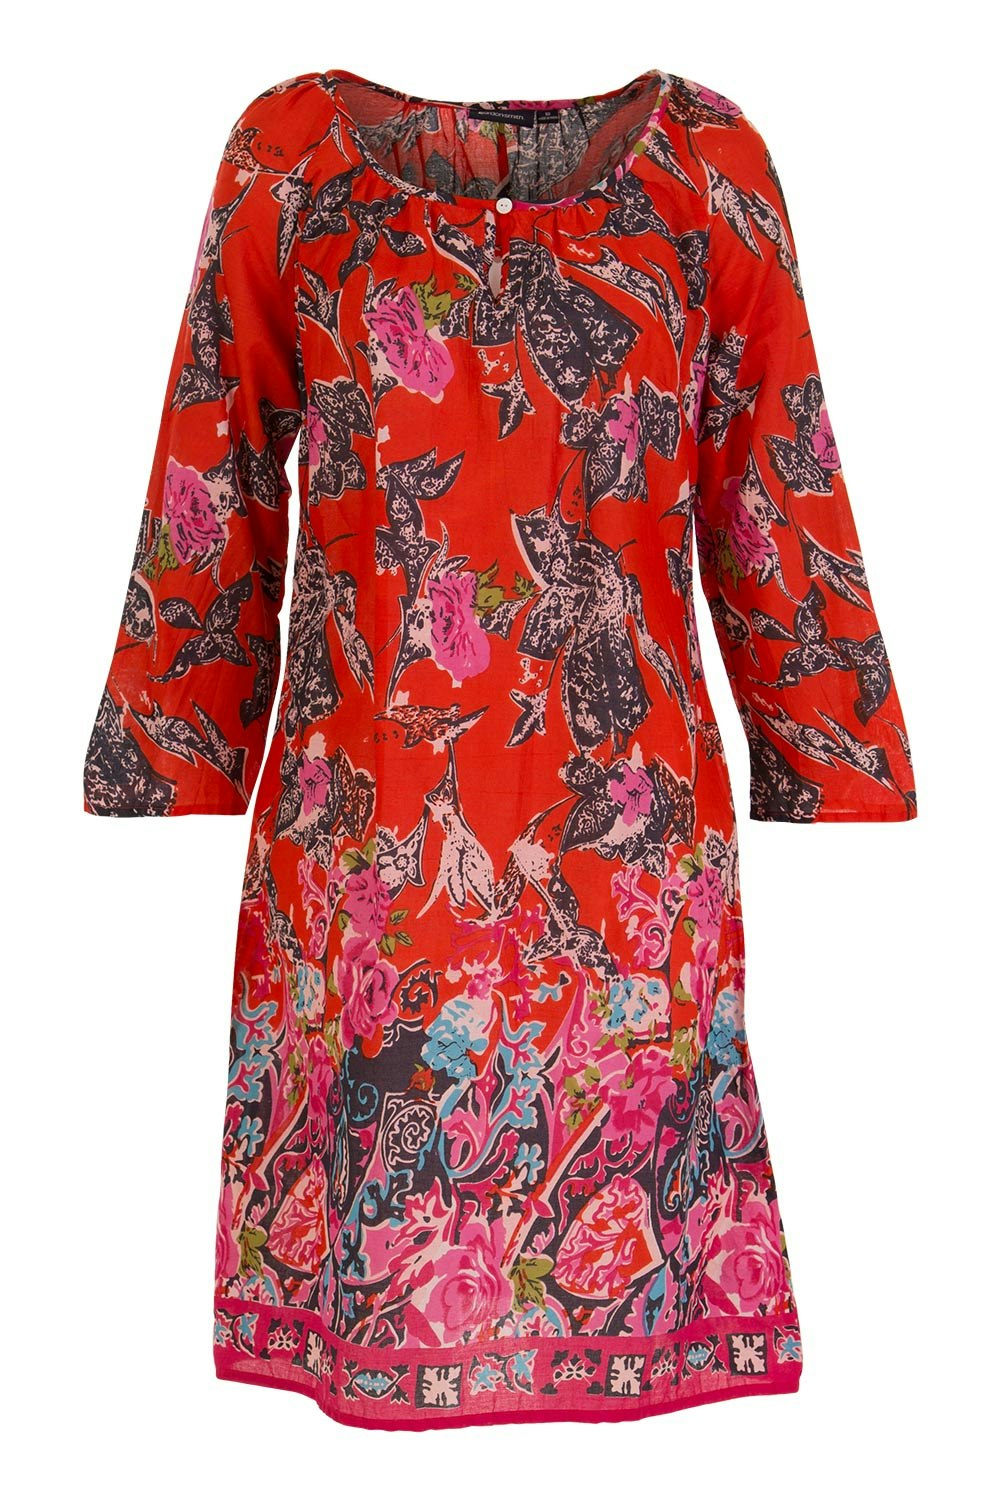 Gordon Smith clothing Red Baroque Print Dress - Womens Knee Length ...